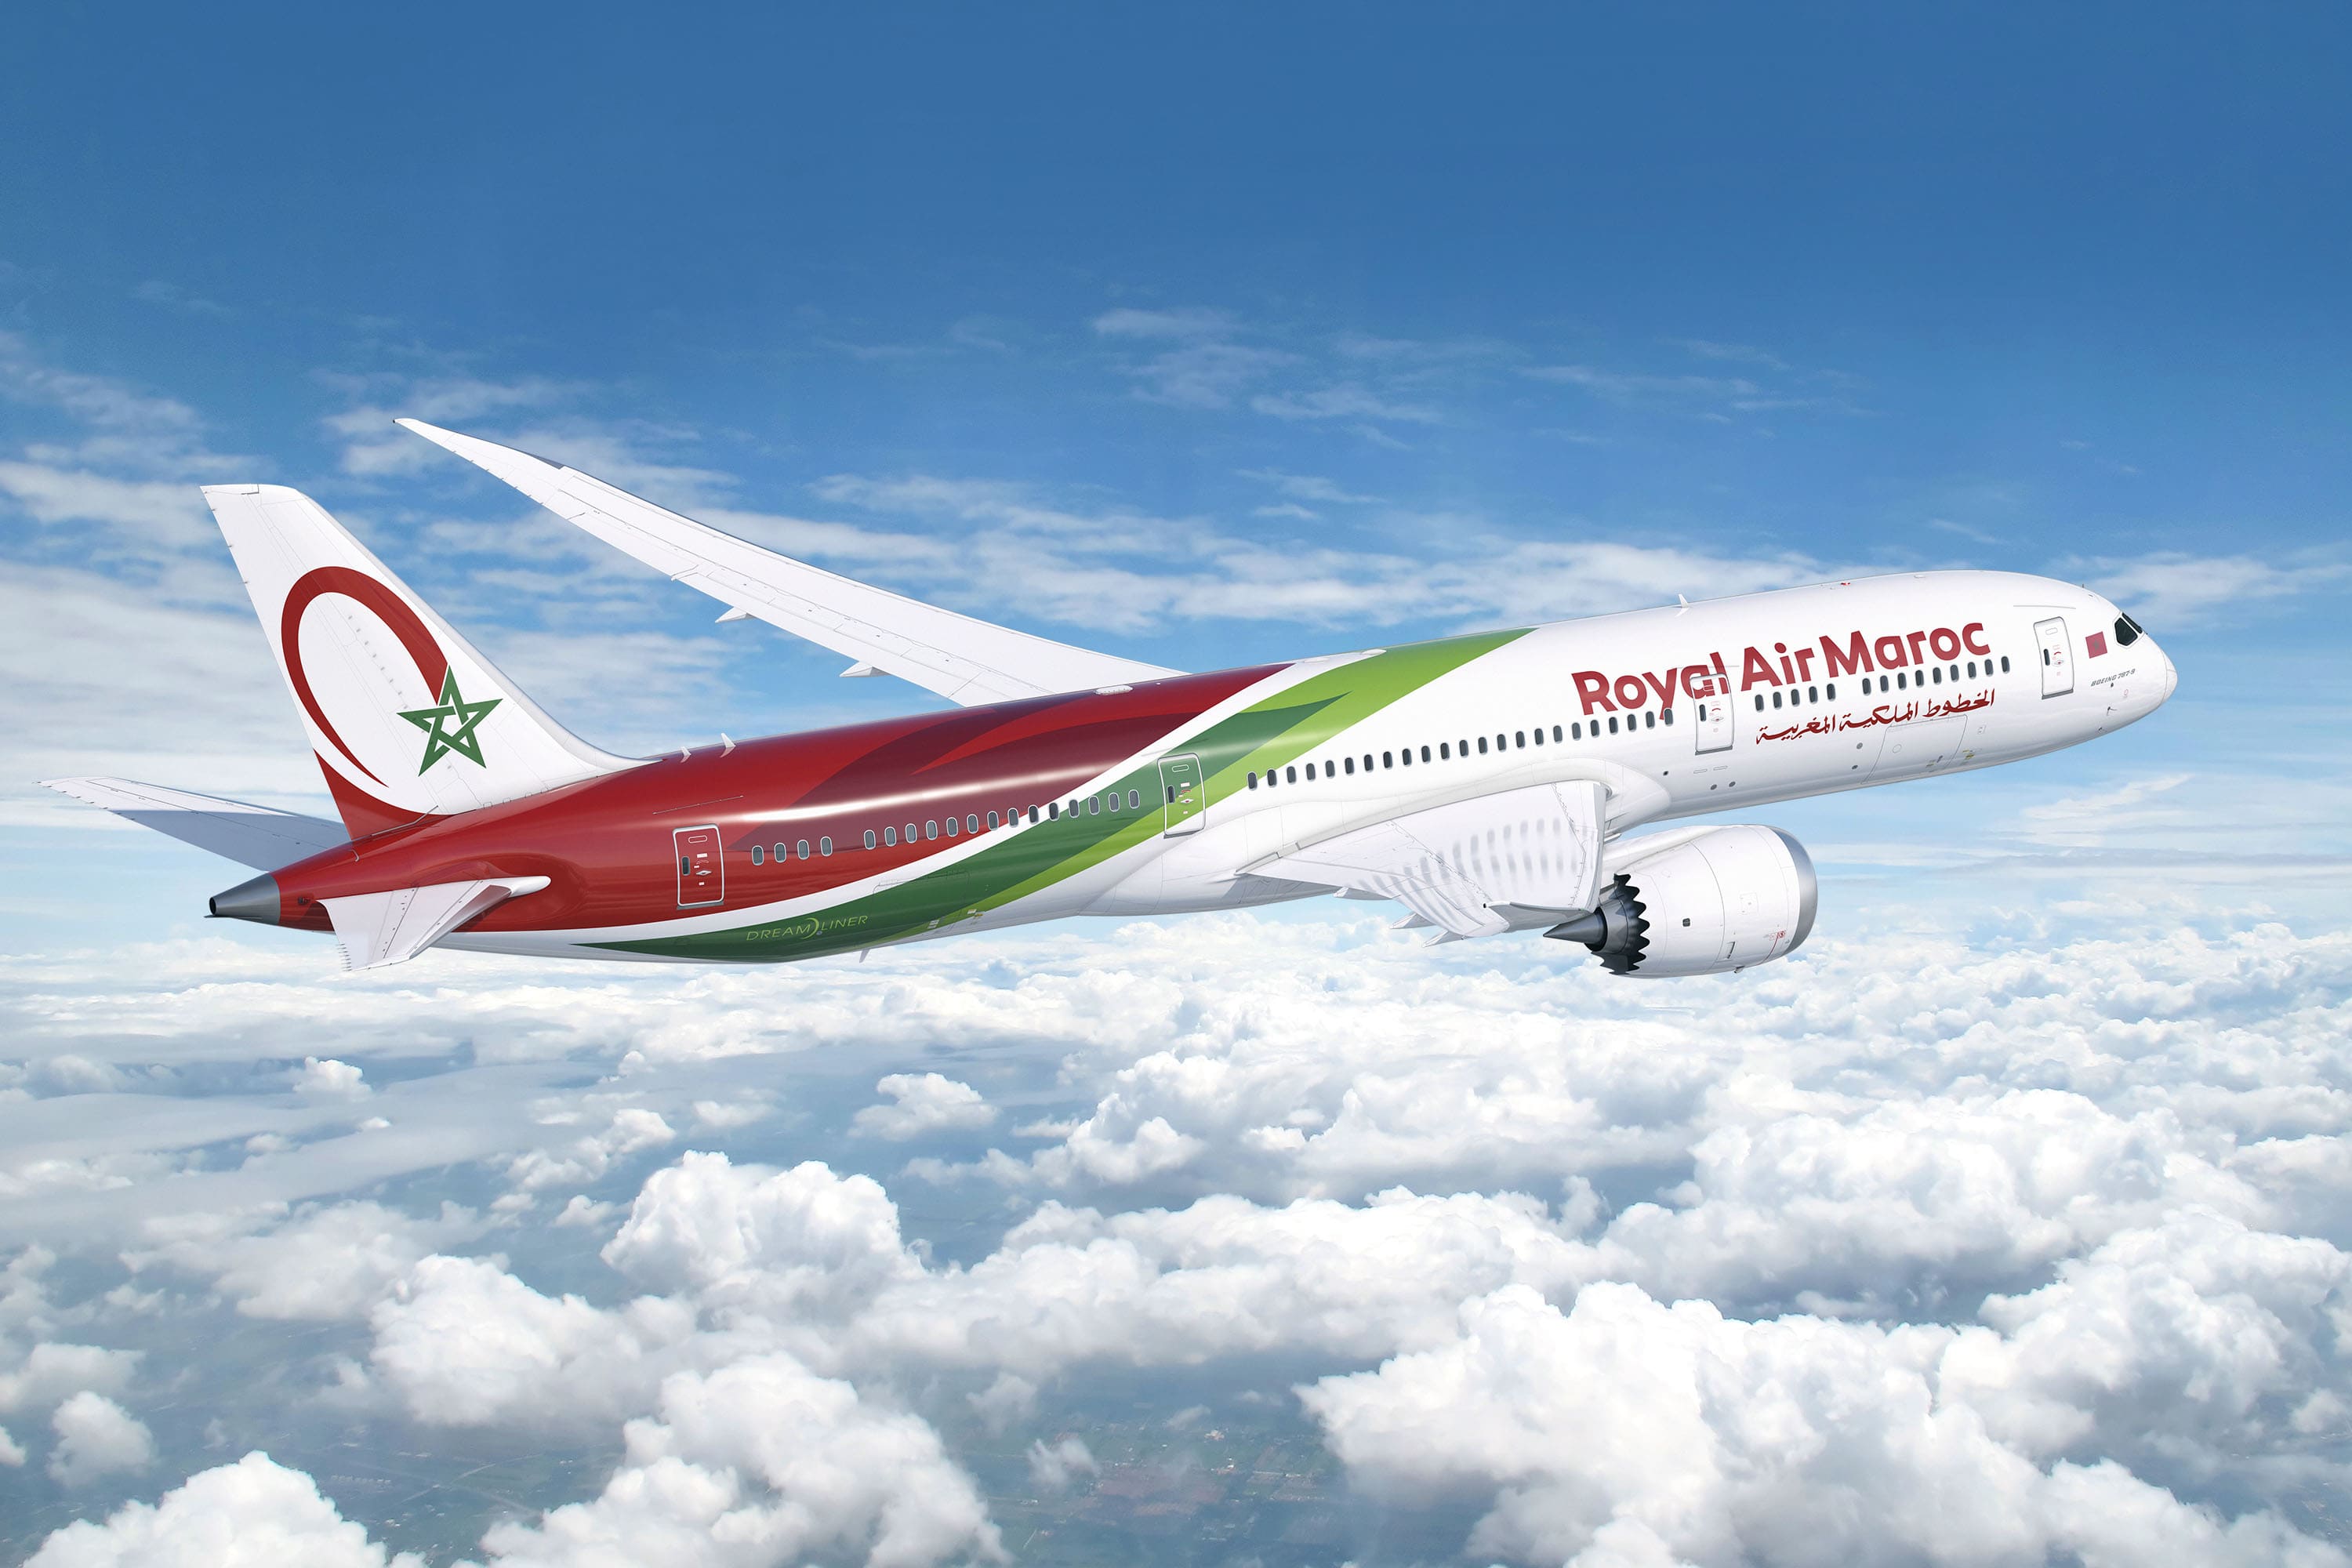 Safar Flyer Gold advantages on Royal Air Maroc flights